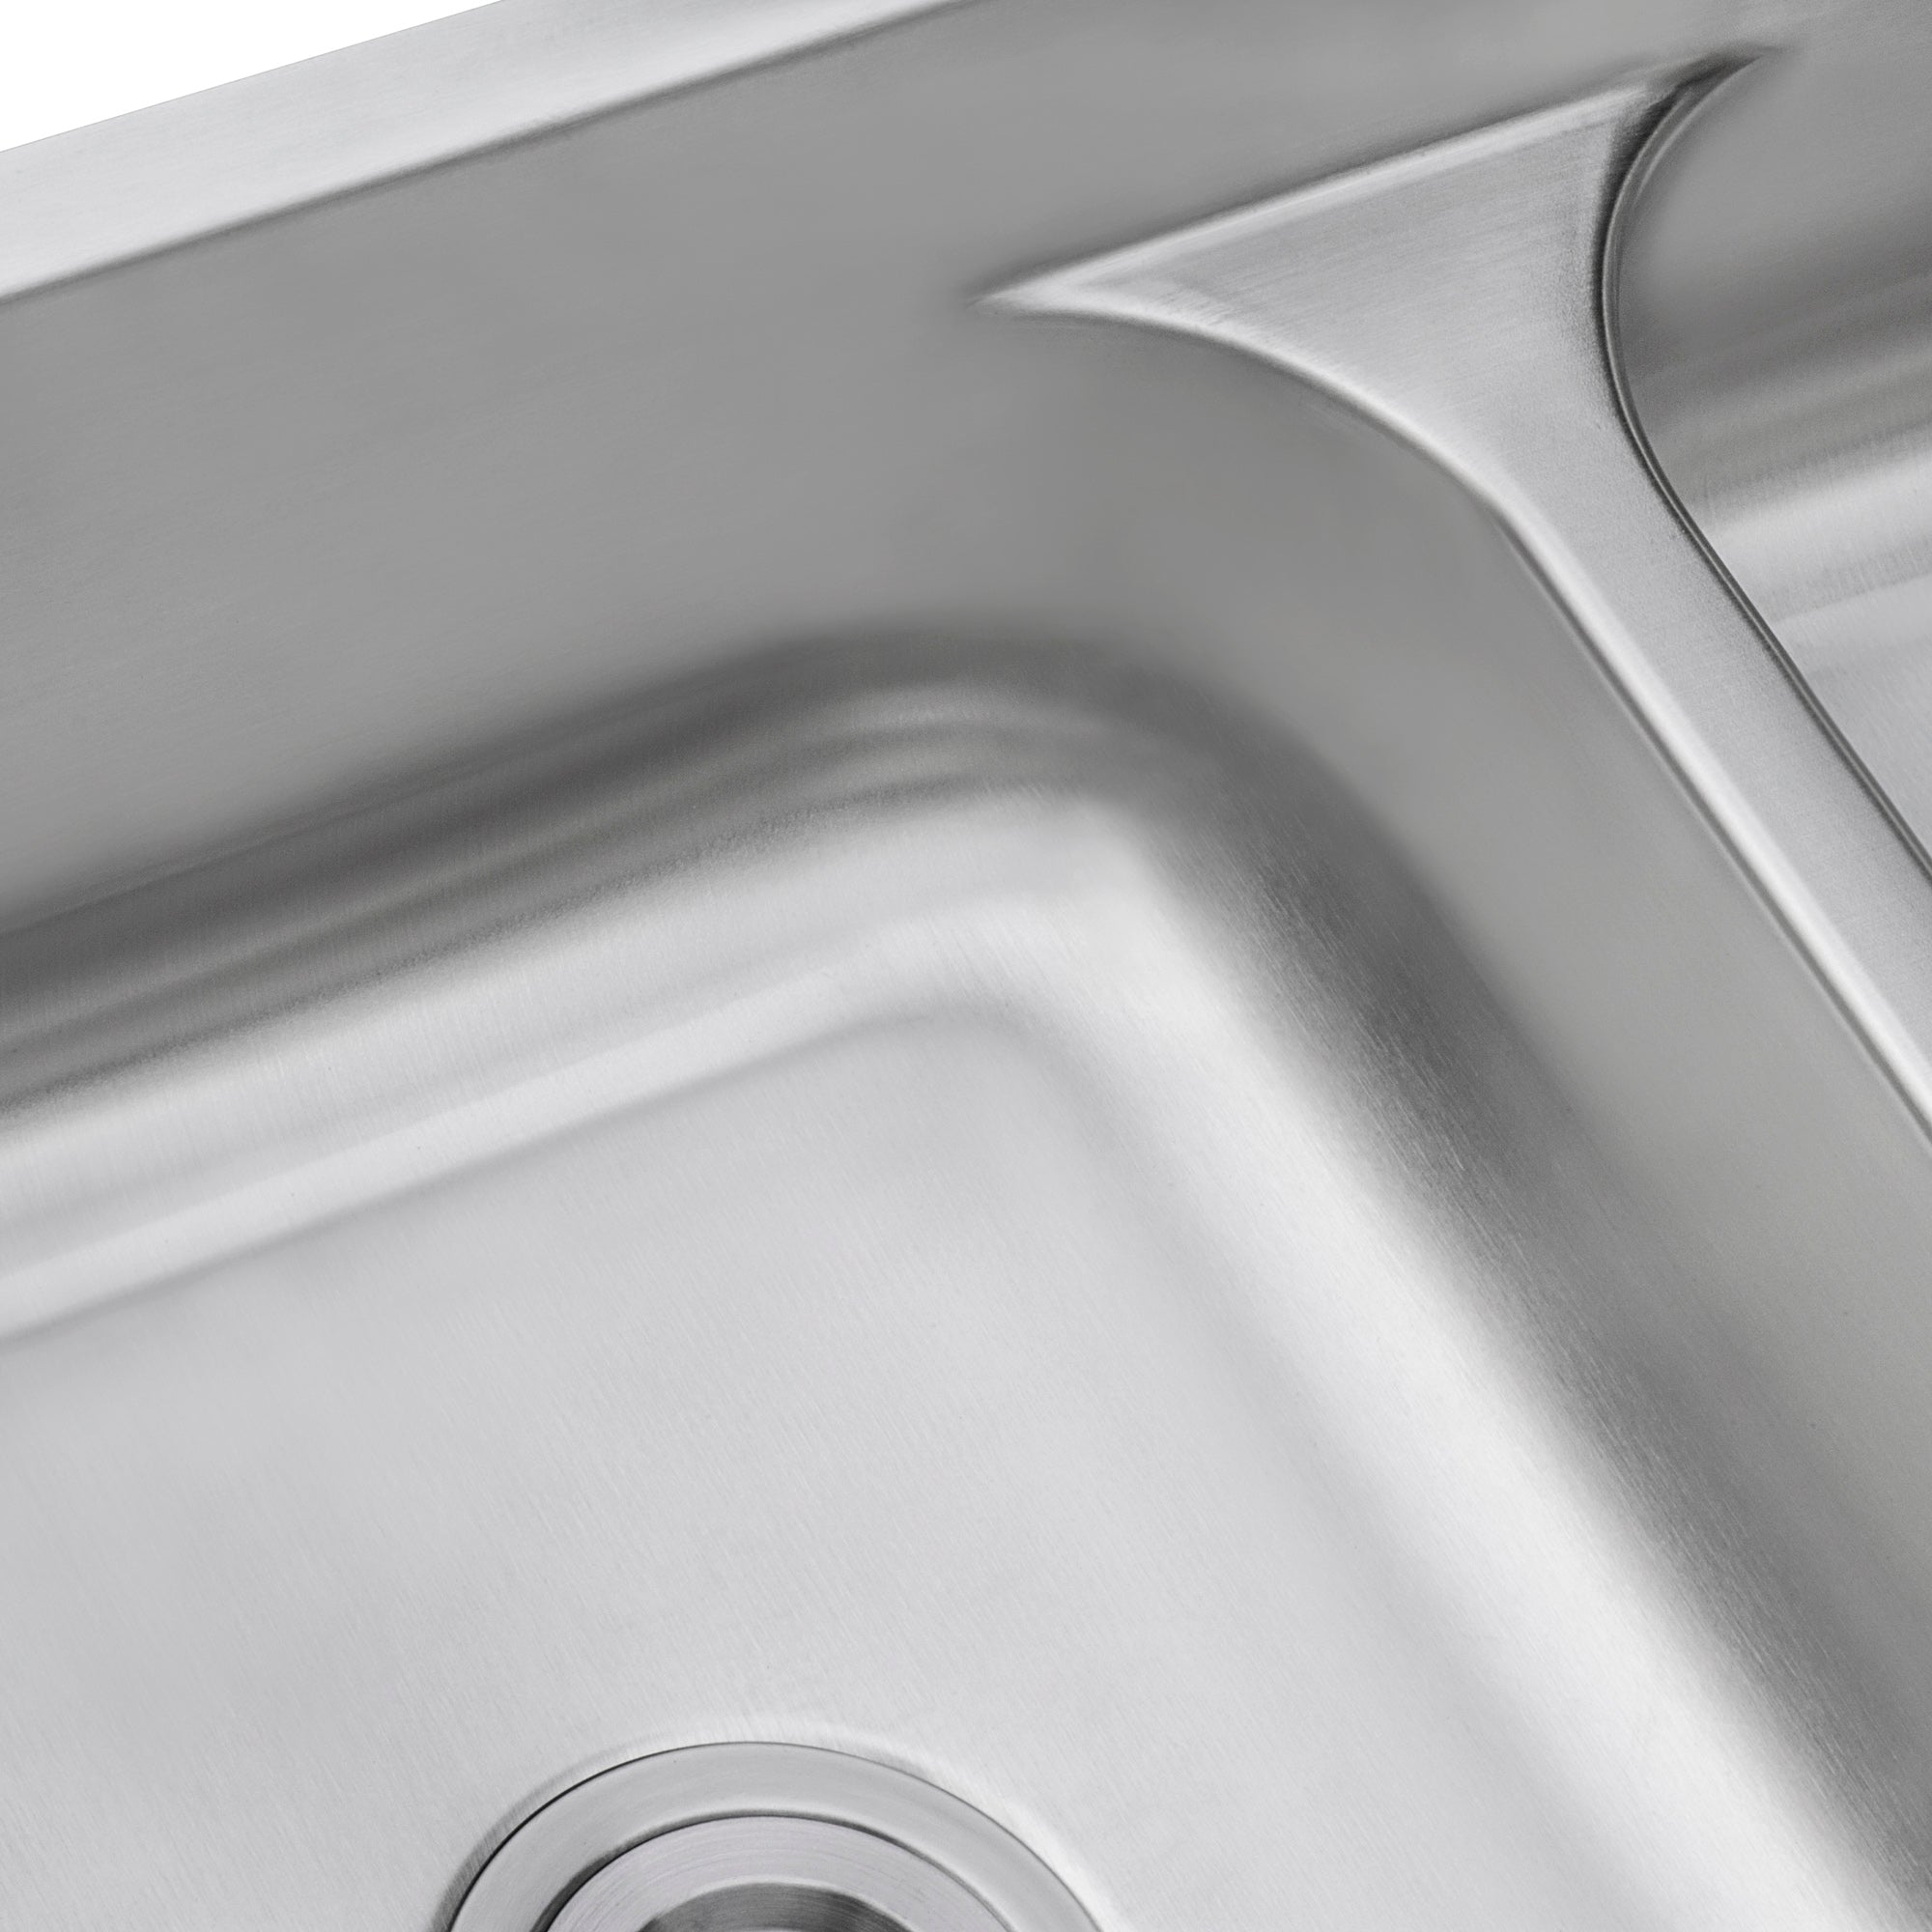 Ruvati 32" Low-Divide 50/50 Double Bowl Undermount 16 Gauge Stainless Steel Kitchen Sink